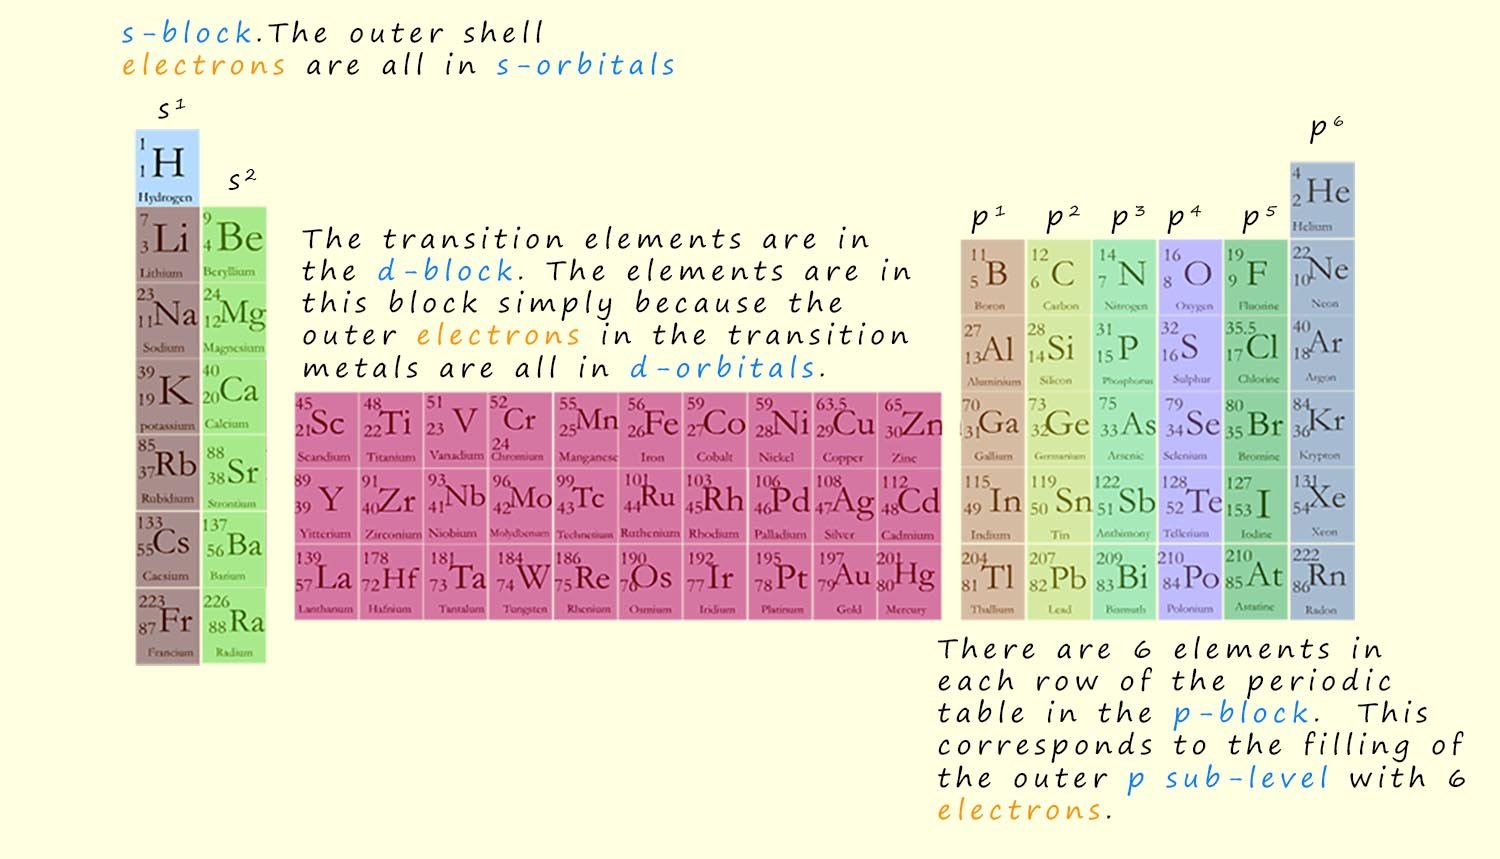 electron blocks in the periodic table